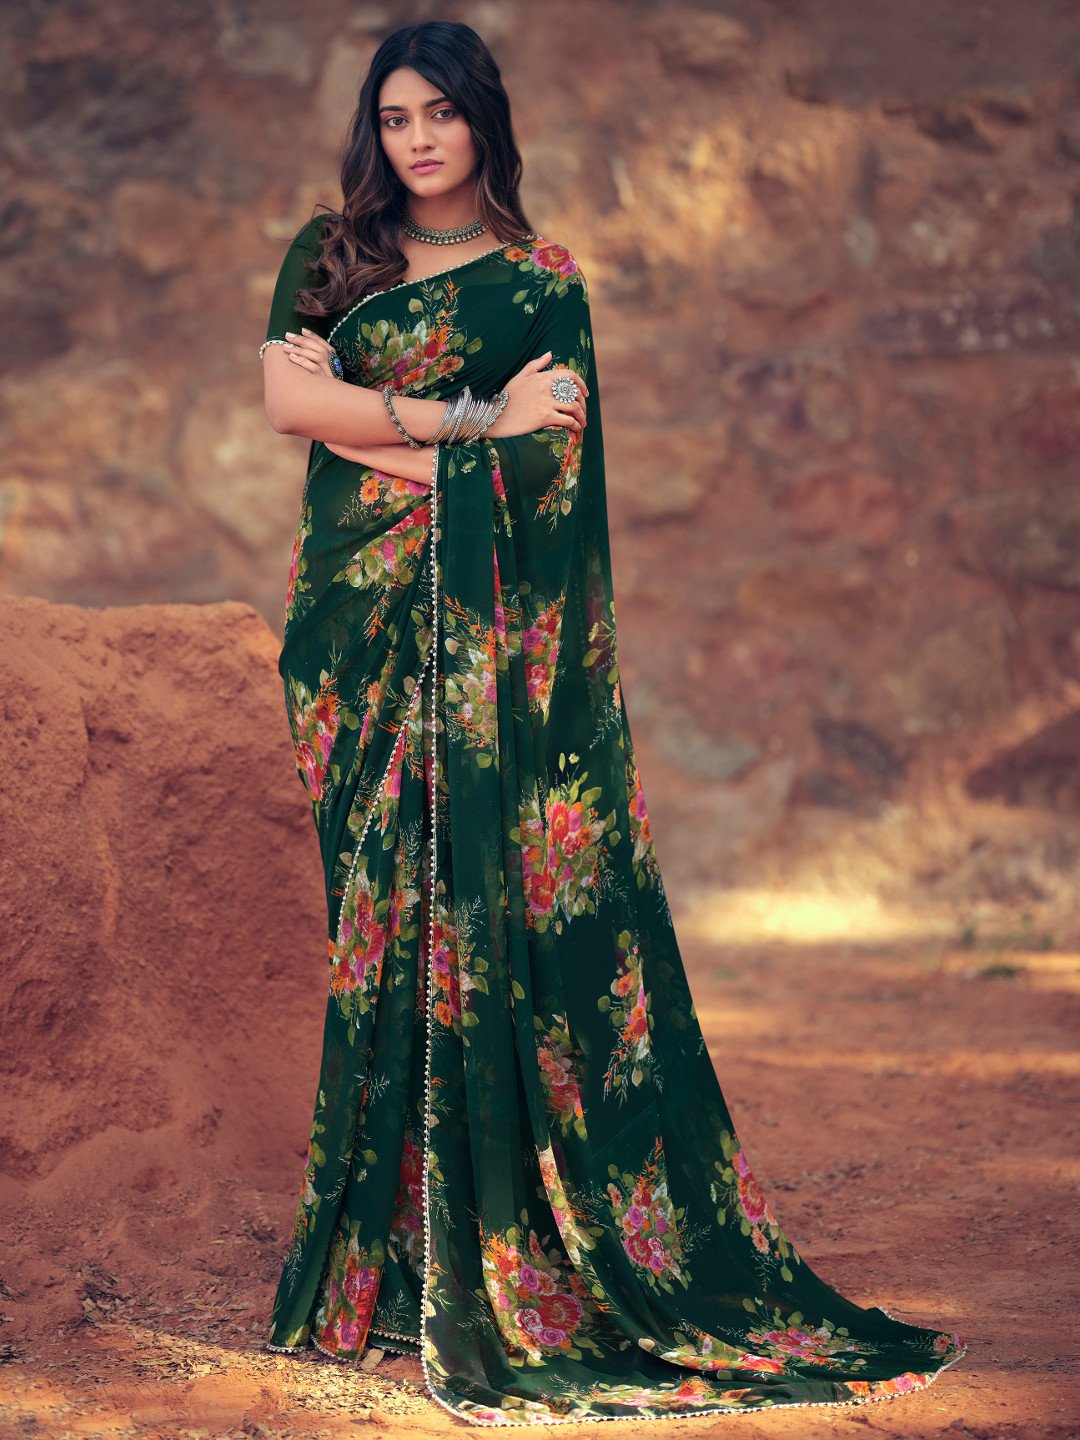 Real Brides Who Wore Gorgeous Silk Sarees For Weddings – ShaadiWish